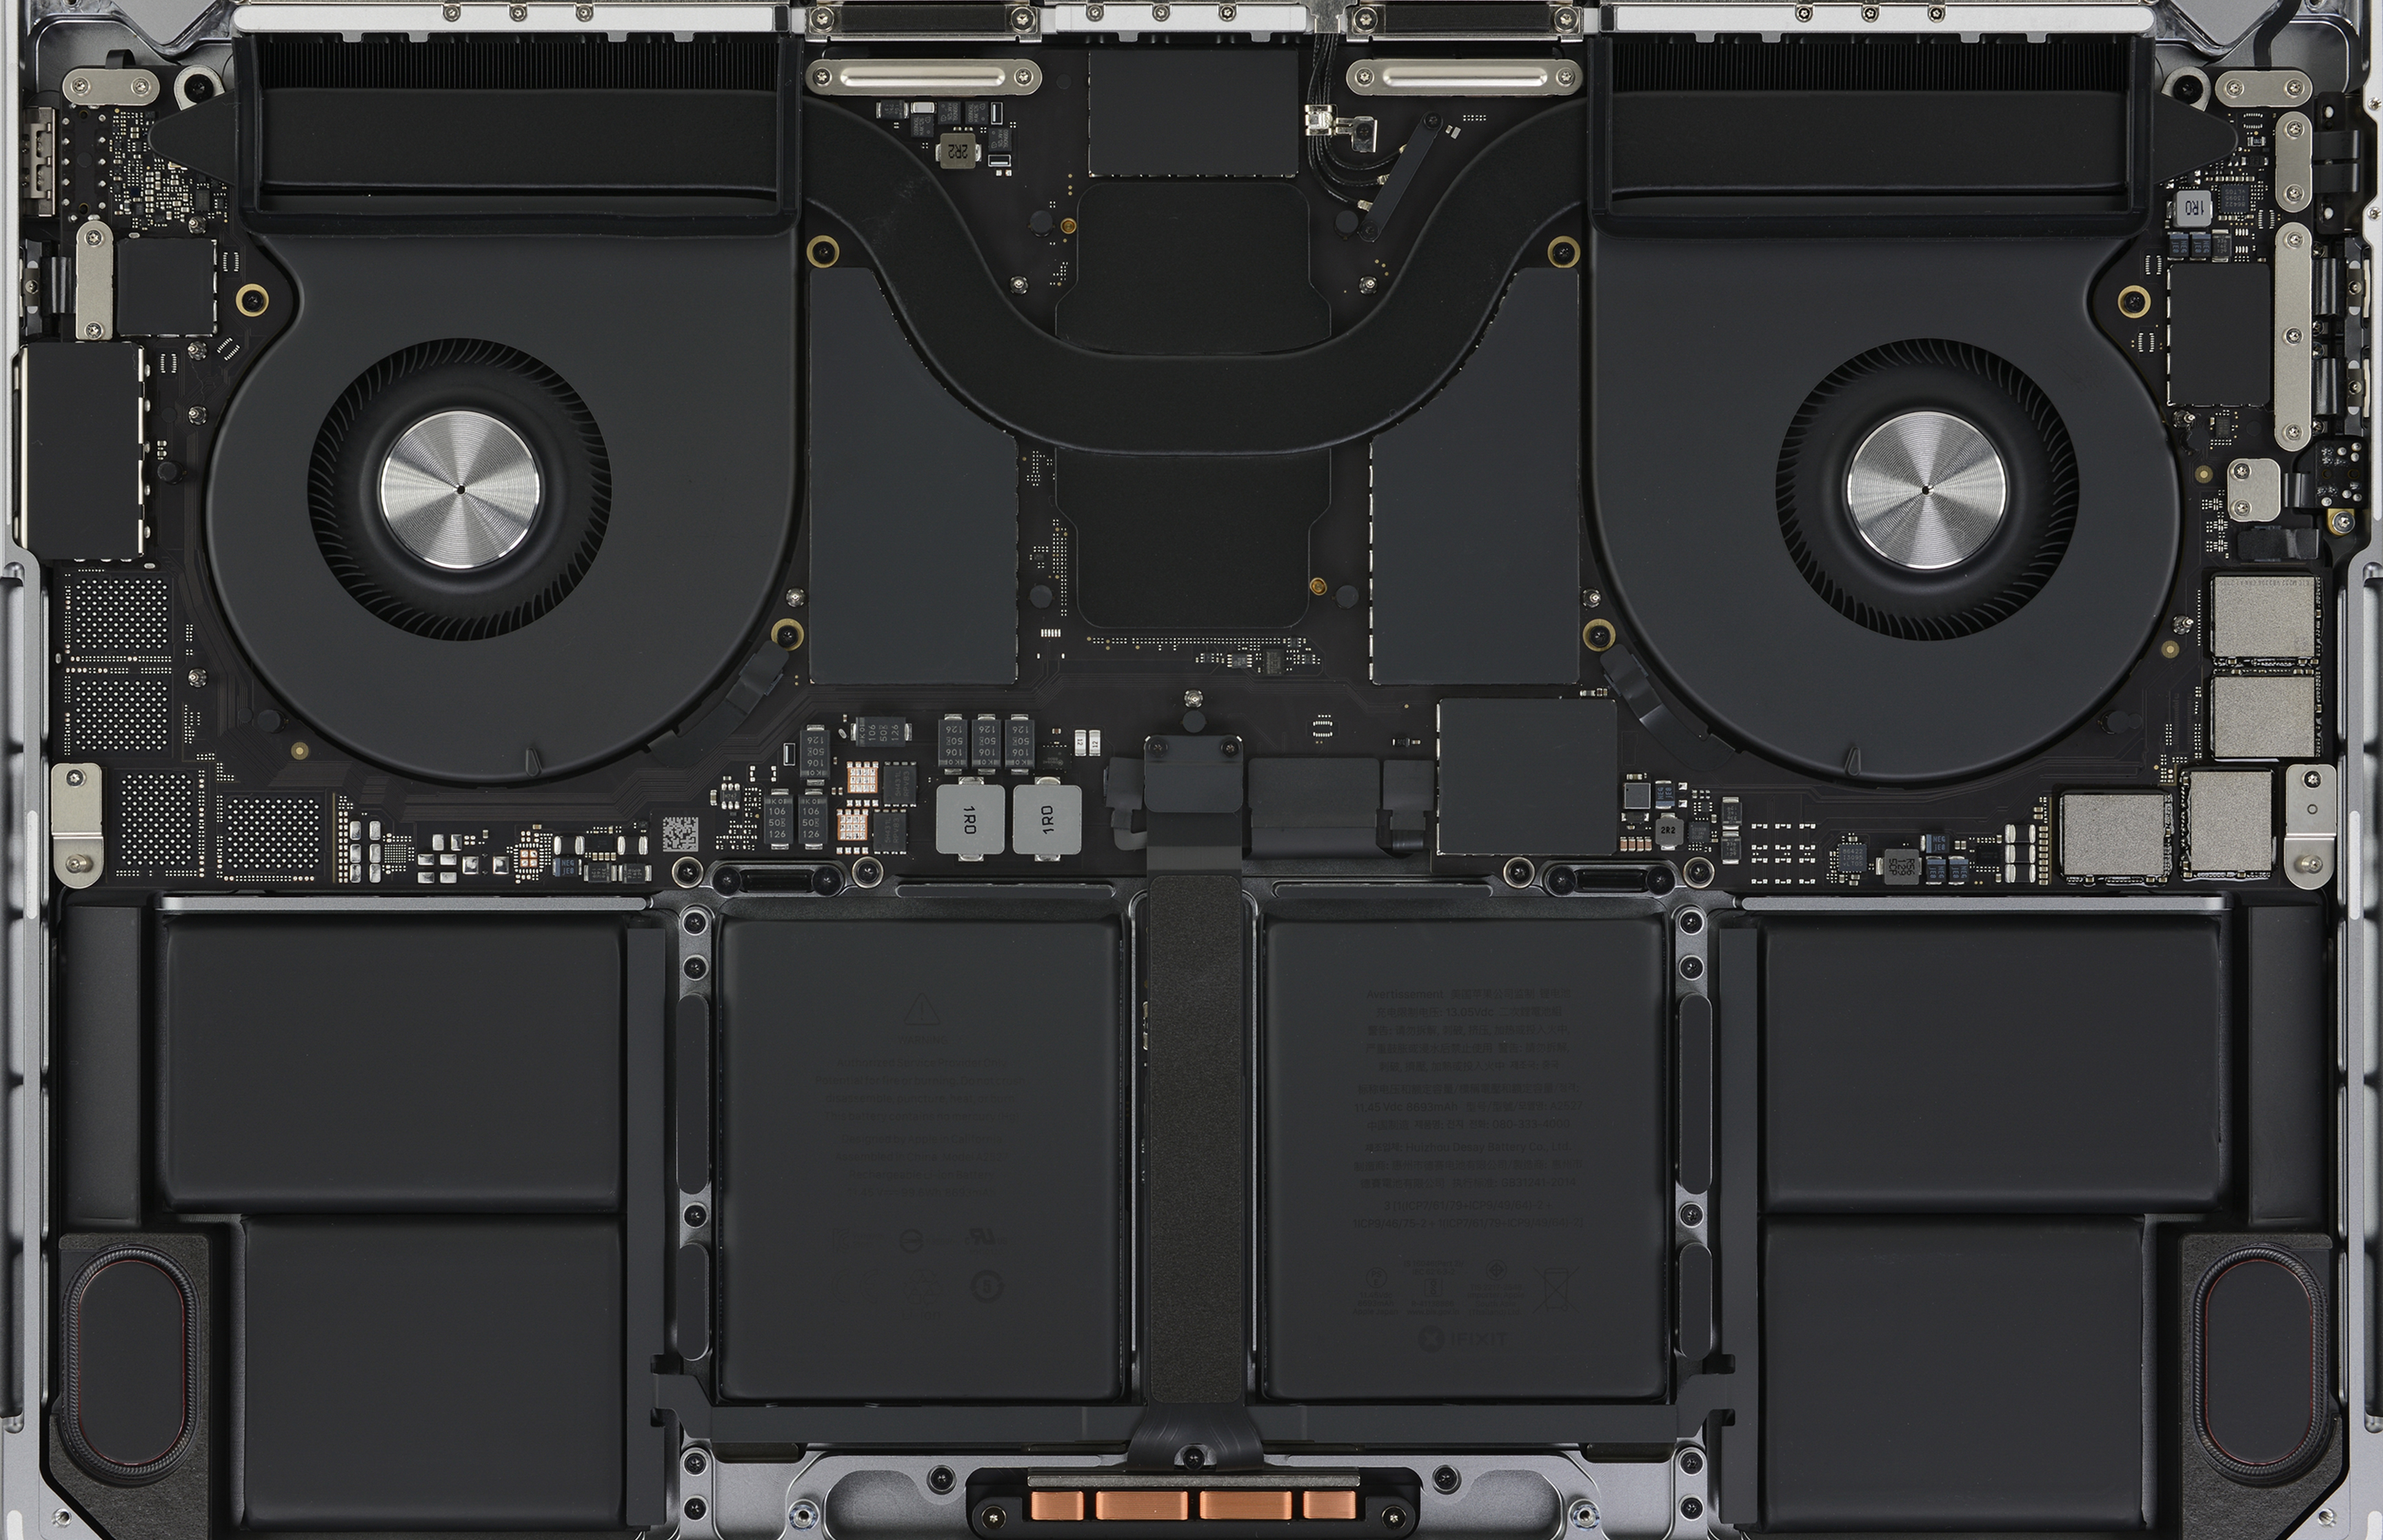 MacBook Pro Wallpaper: See How It Looks Underneath Your Keys